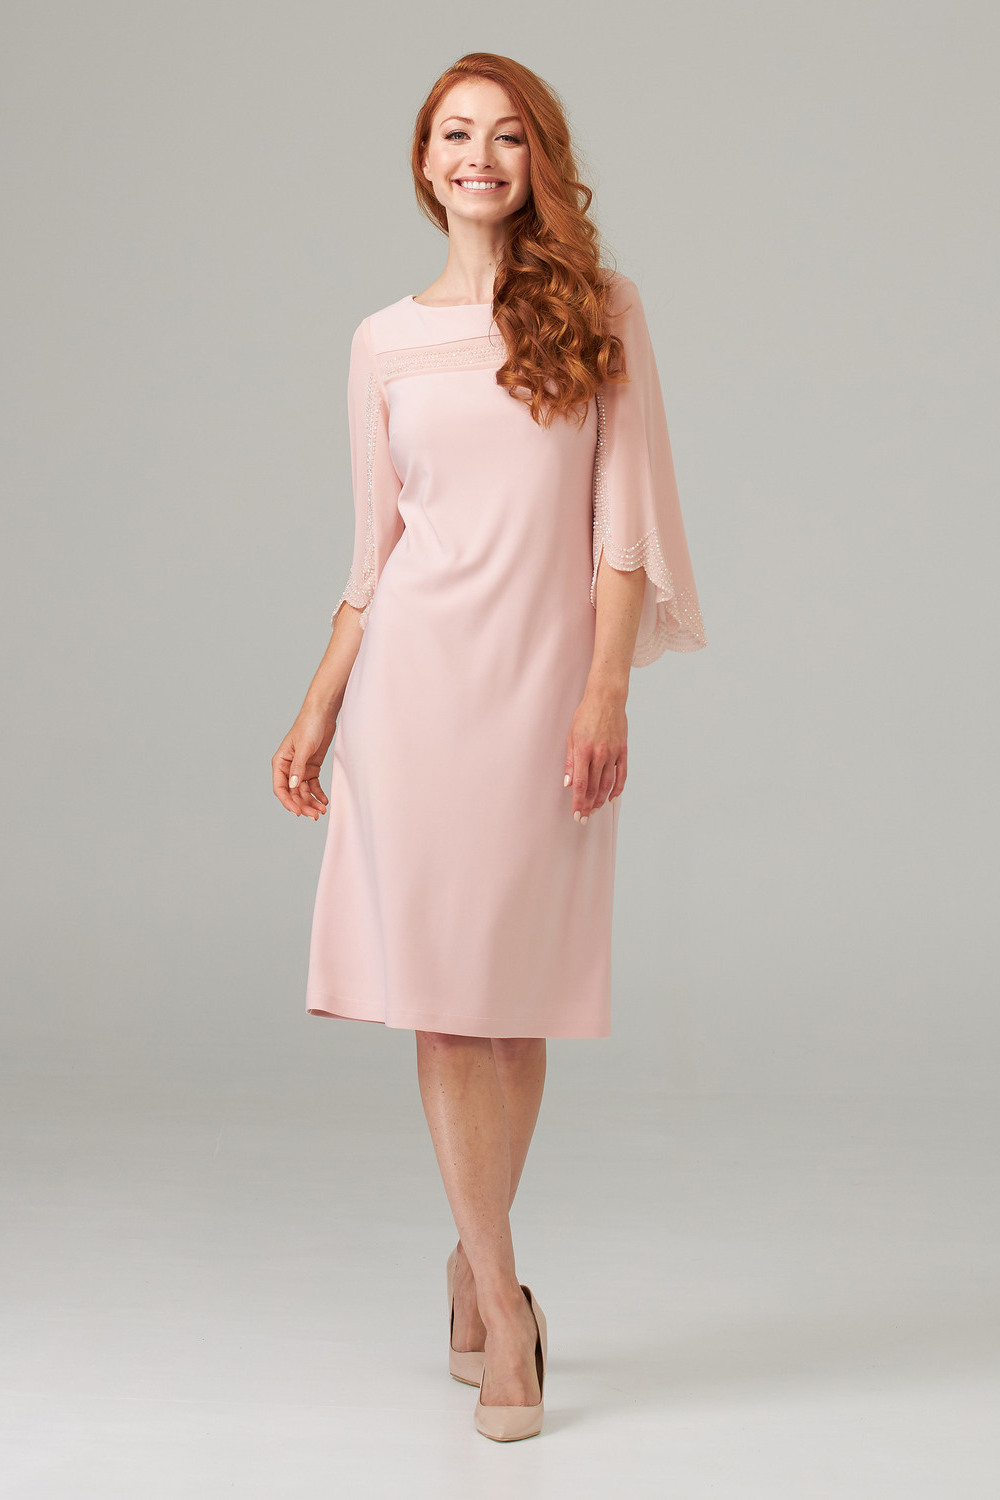 Joseph Ribkoff Dress Style 202266. Rose